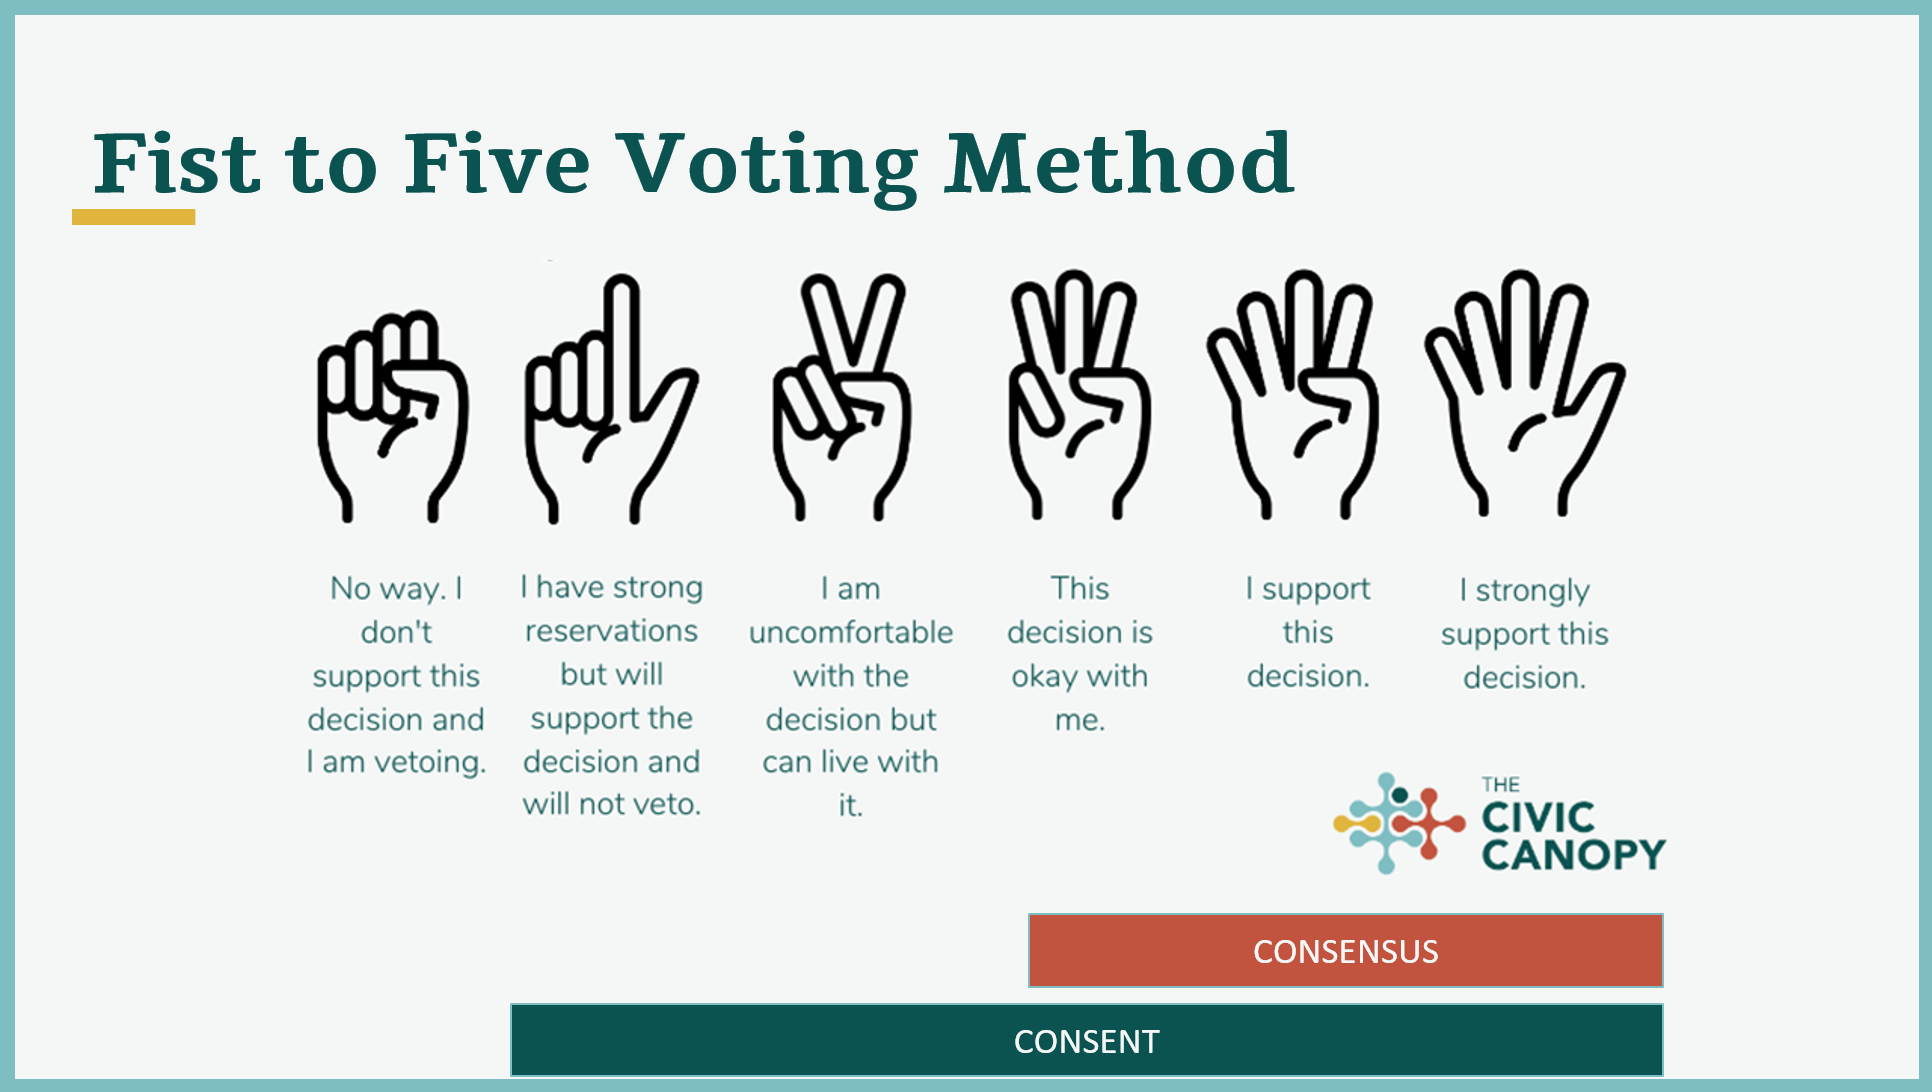 Fist-to-Five Voting Method